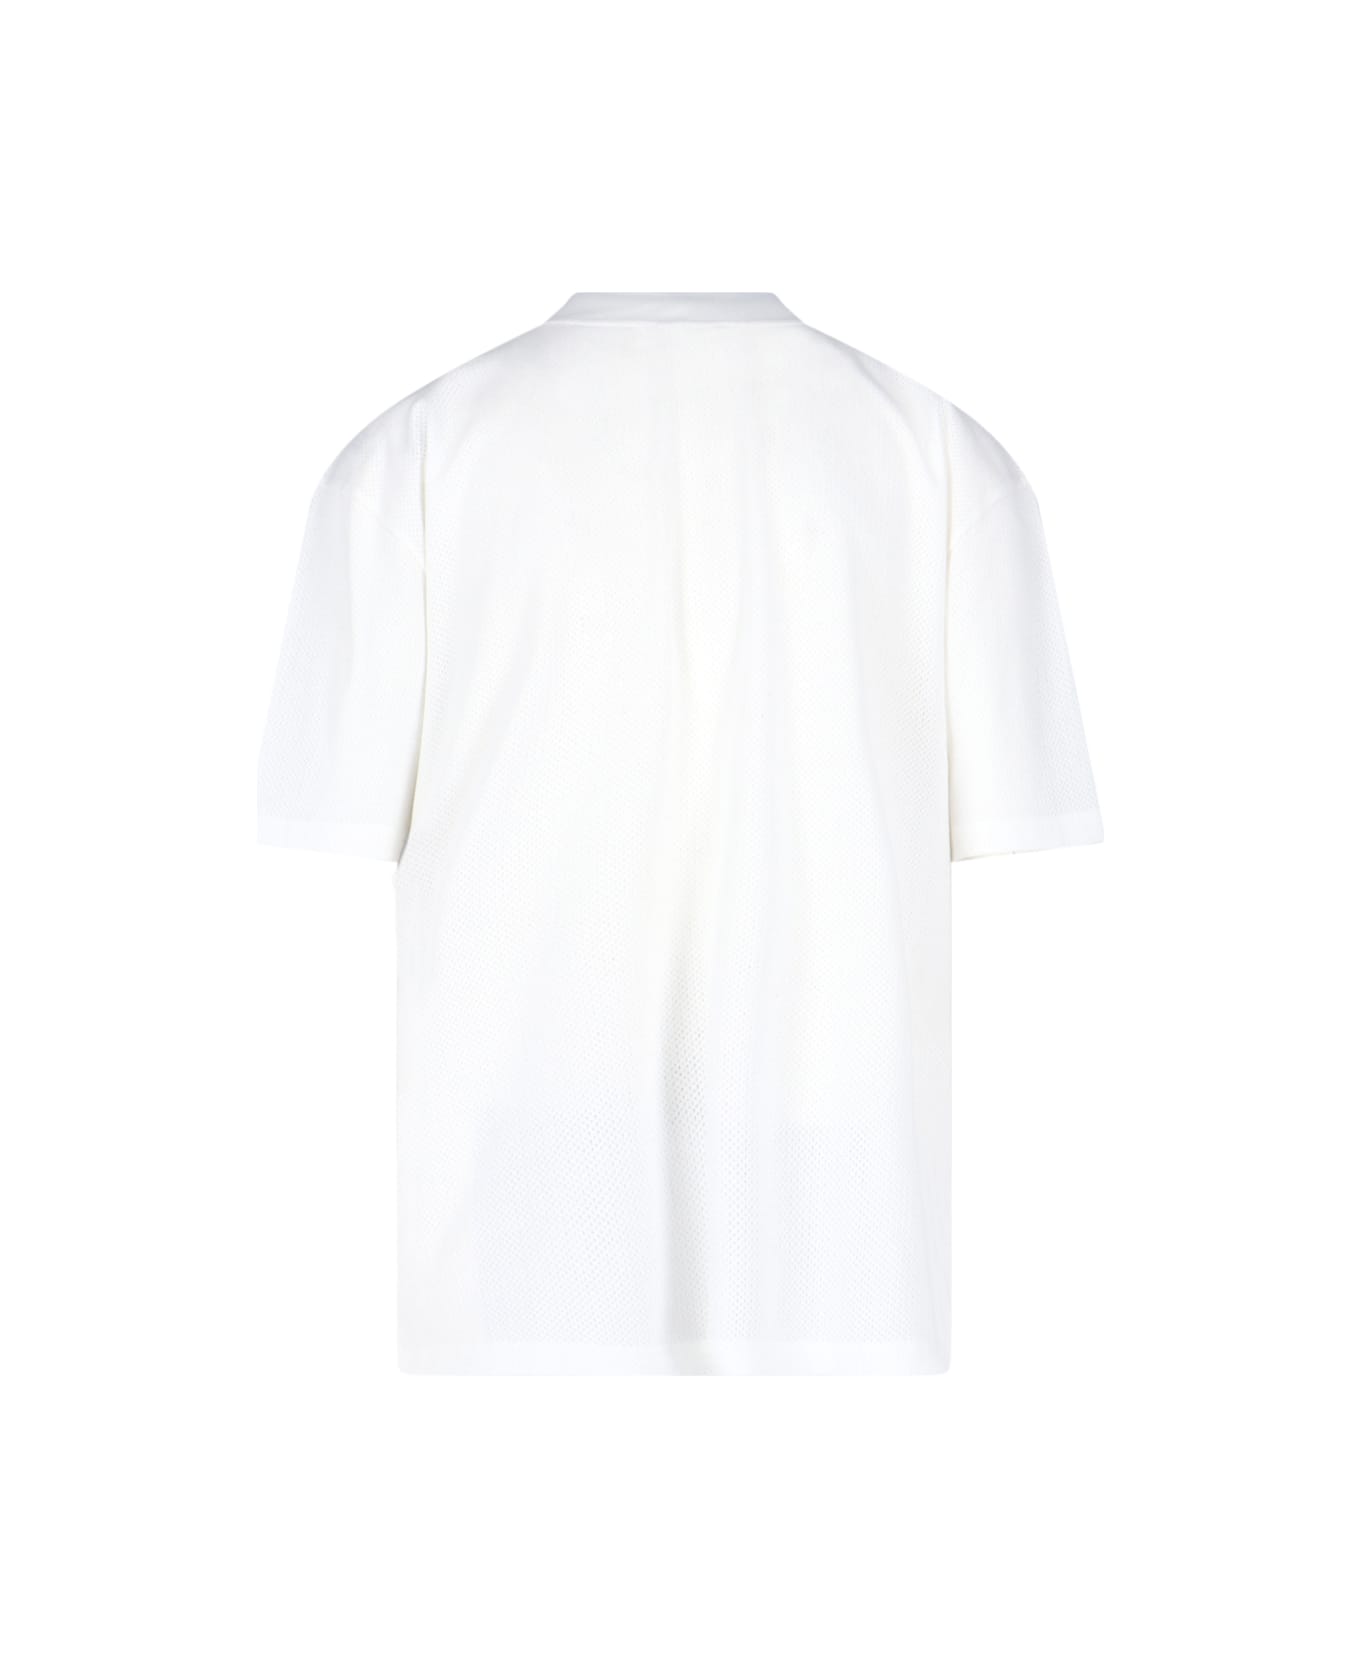 A.P.C. Logo T-shirt - White